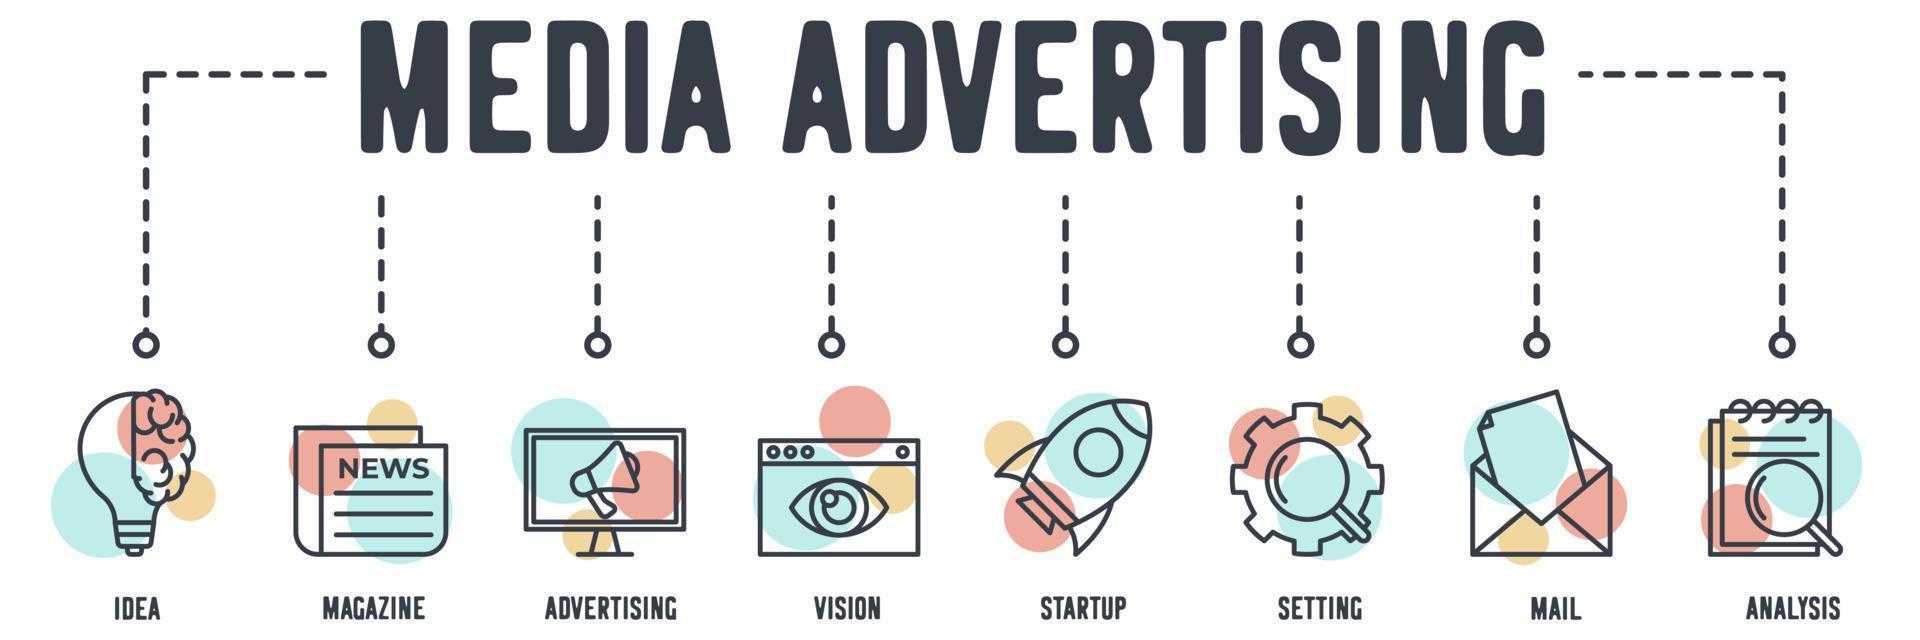 Media Advertising banner web icon. idea, magazine, advertising, vision, rocket startup, setting, mail, analysis vector illustration concept.